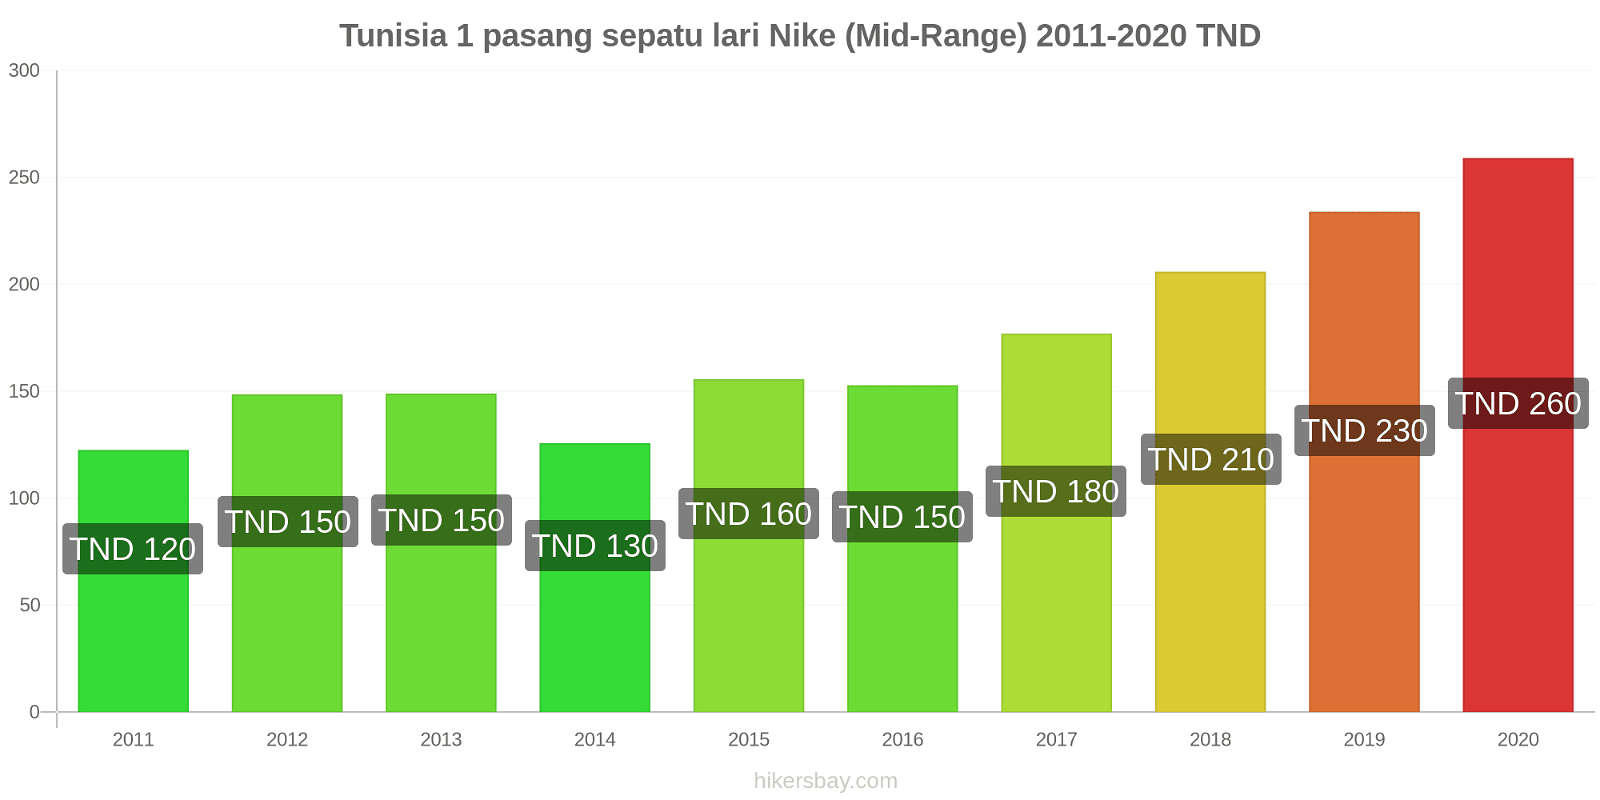 Tunisia perubahan harga 1 pasang sepatu lari Nike (Mid-Range) hikersbay.com